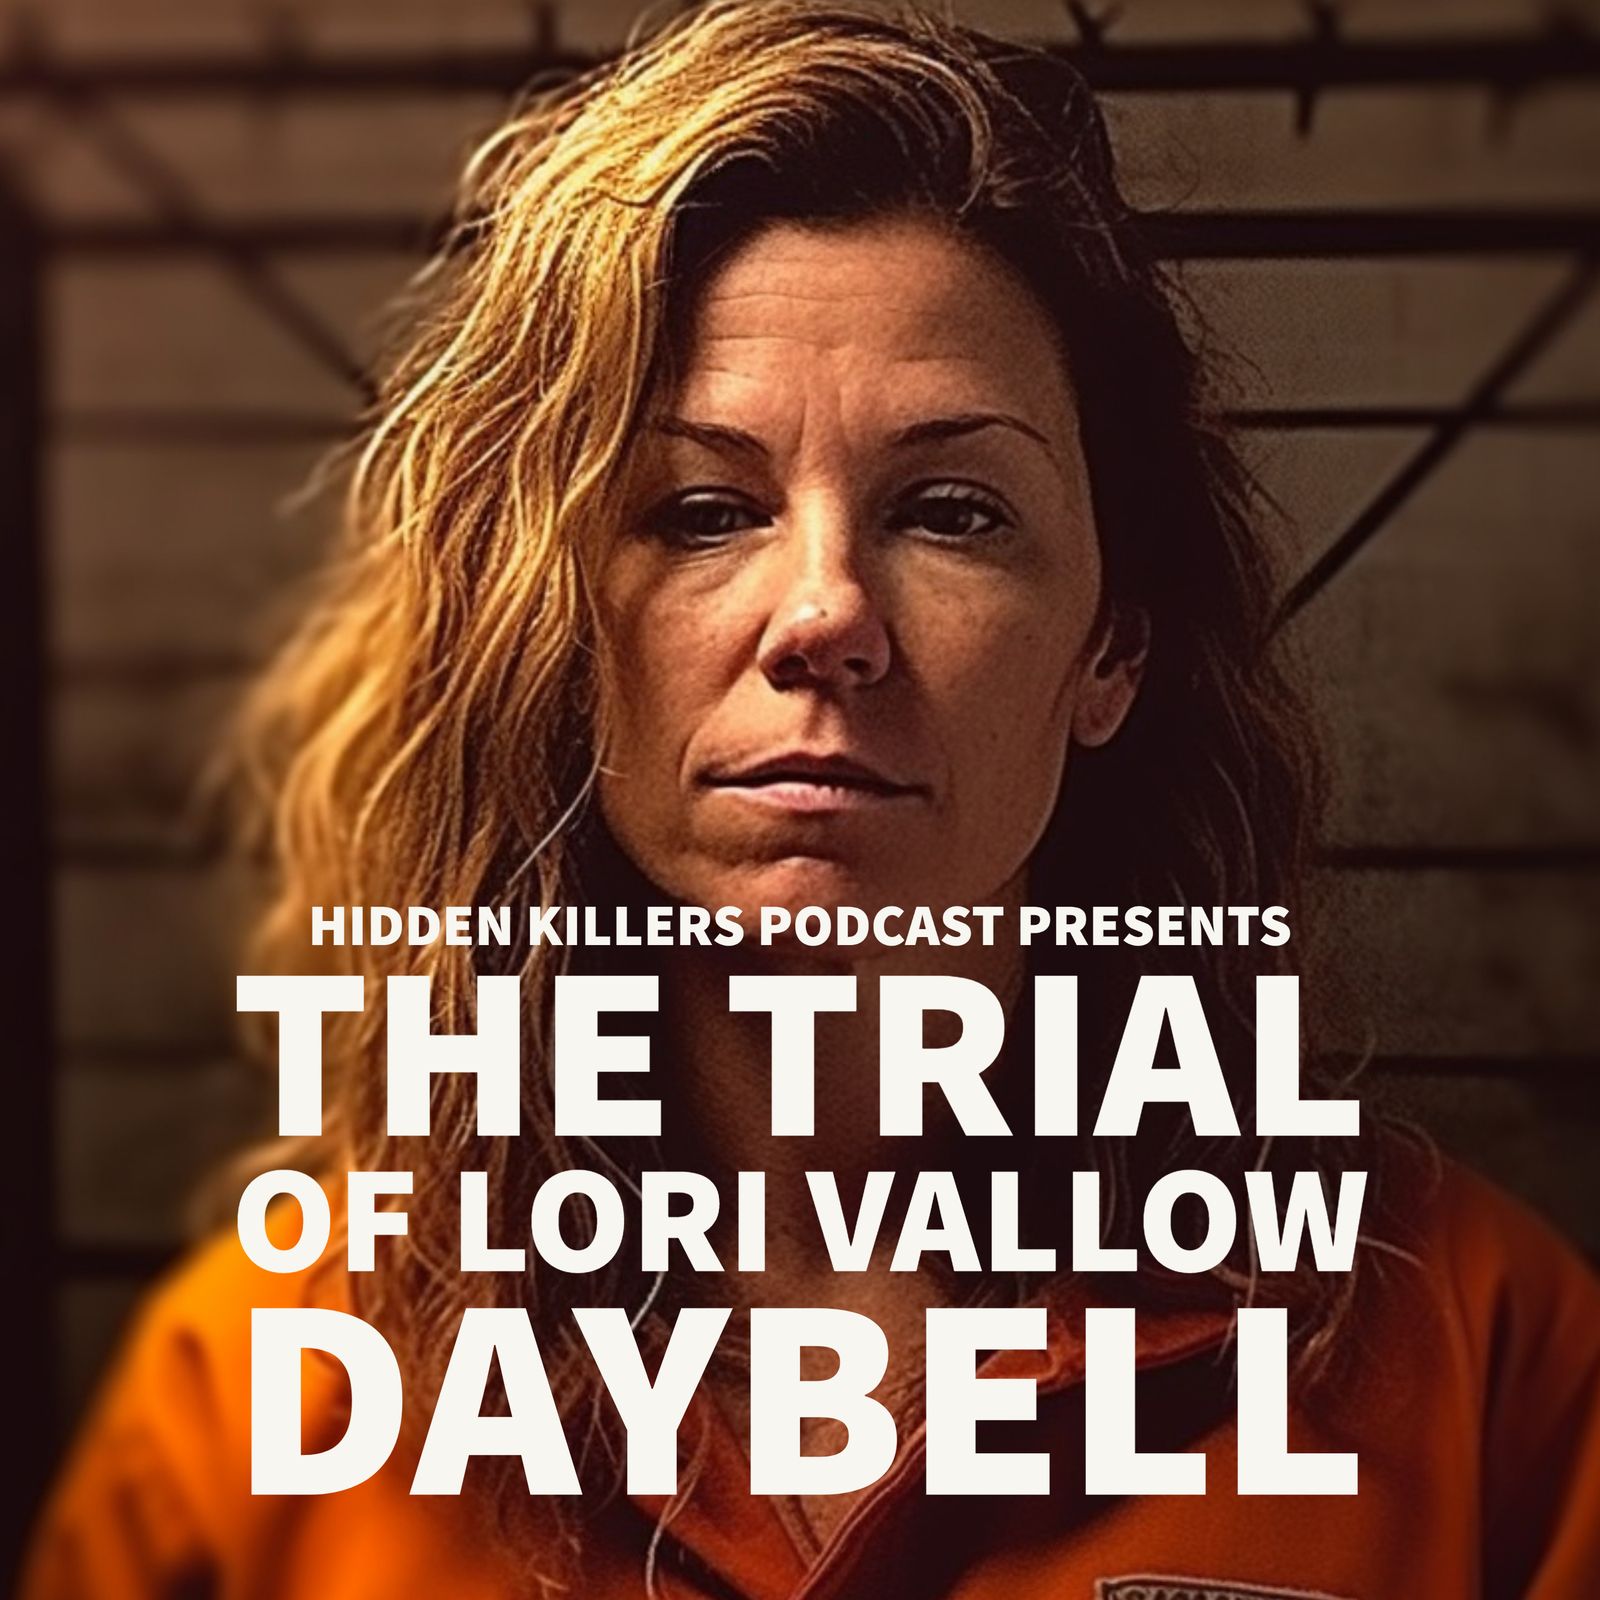 Lori Vallow Daybell